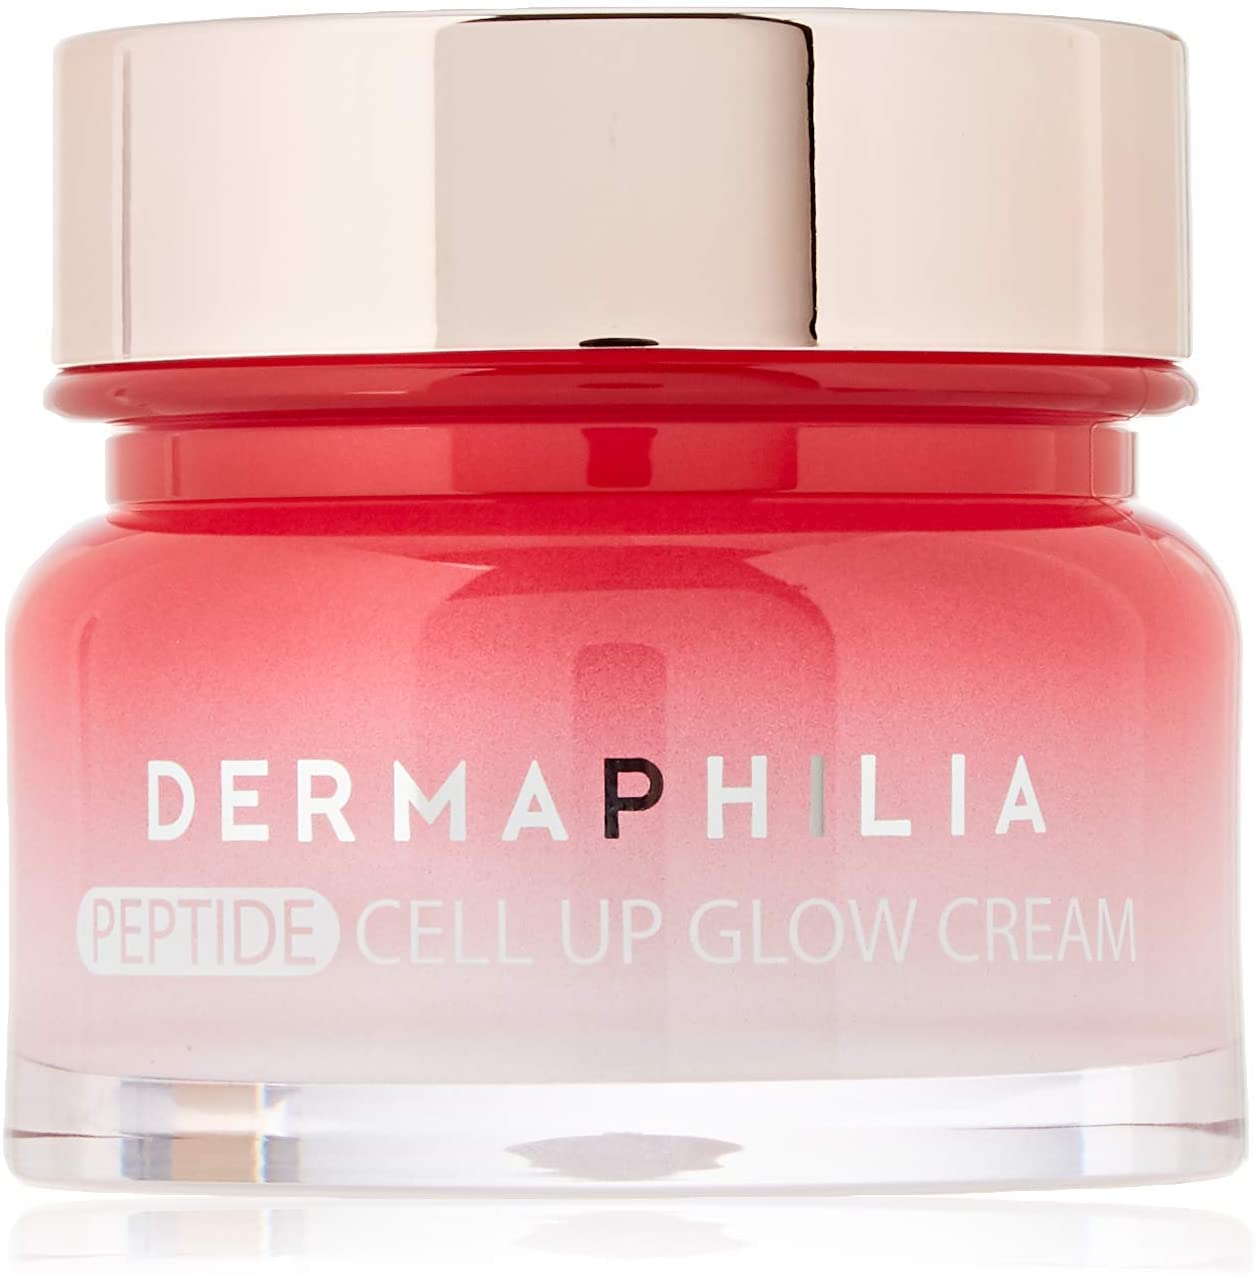 Dermaphilia Peptide Cell Up Glow Cream